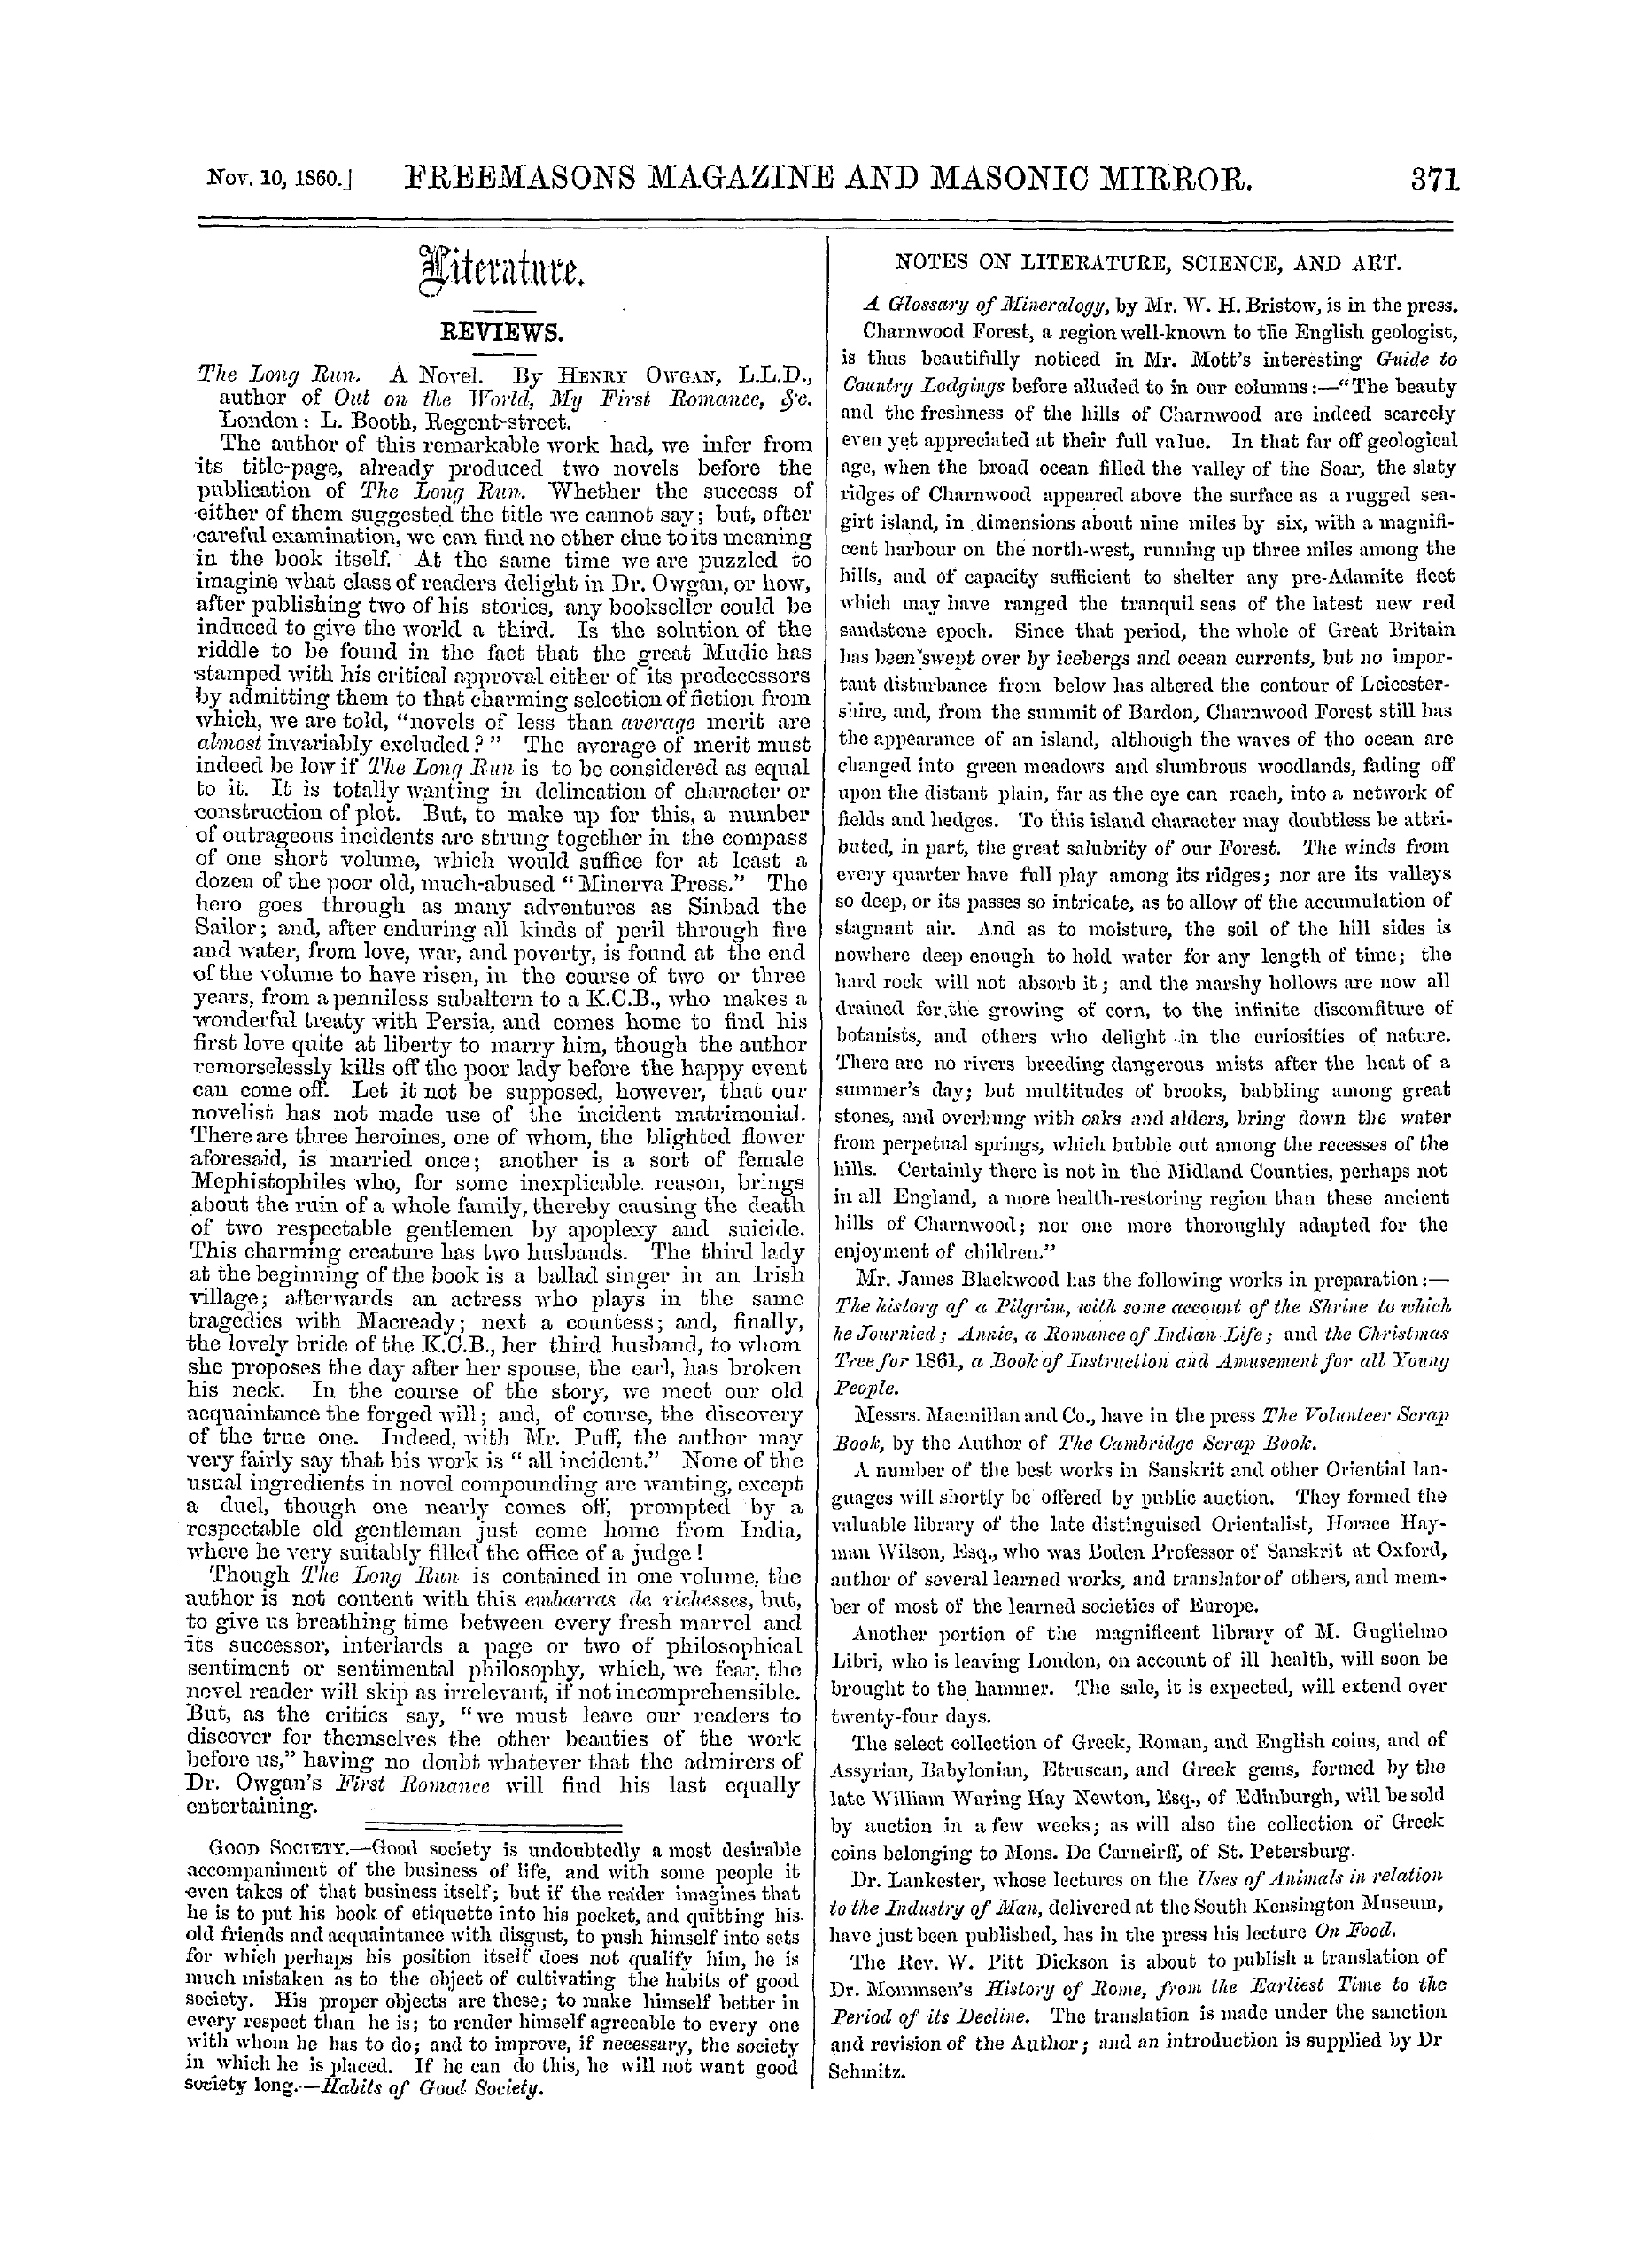 The Freemasons' Monthly Magazine: 1860-11-10 - Literature.